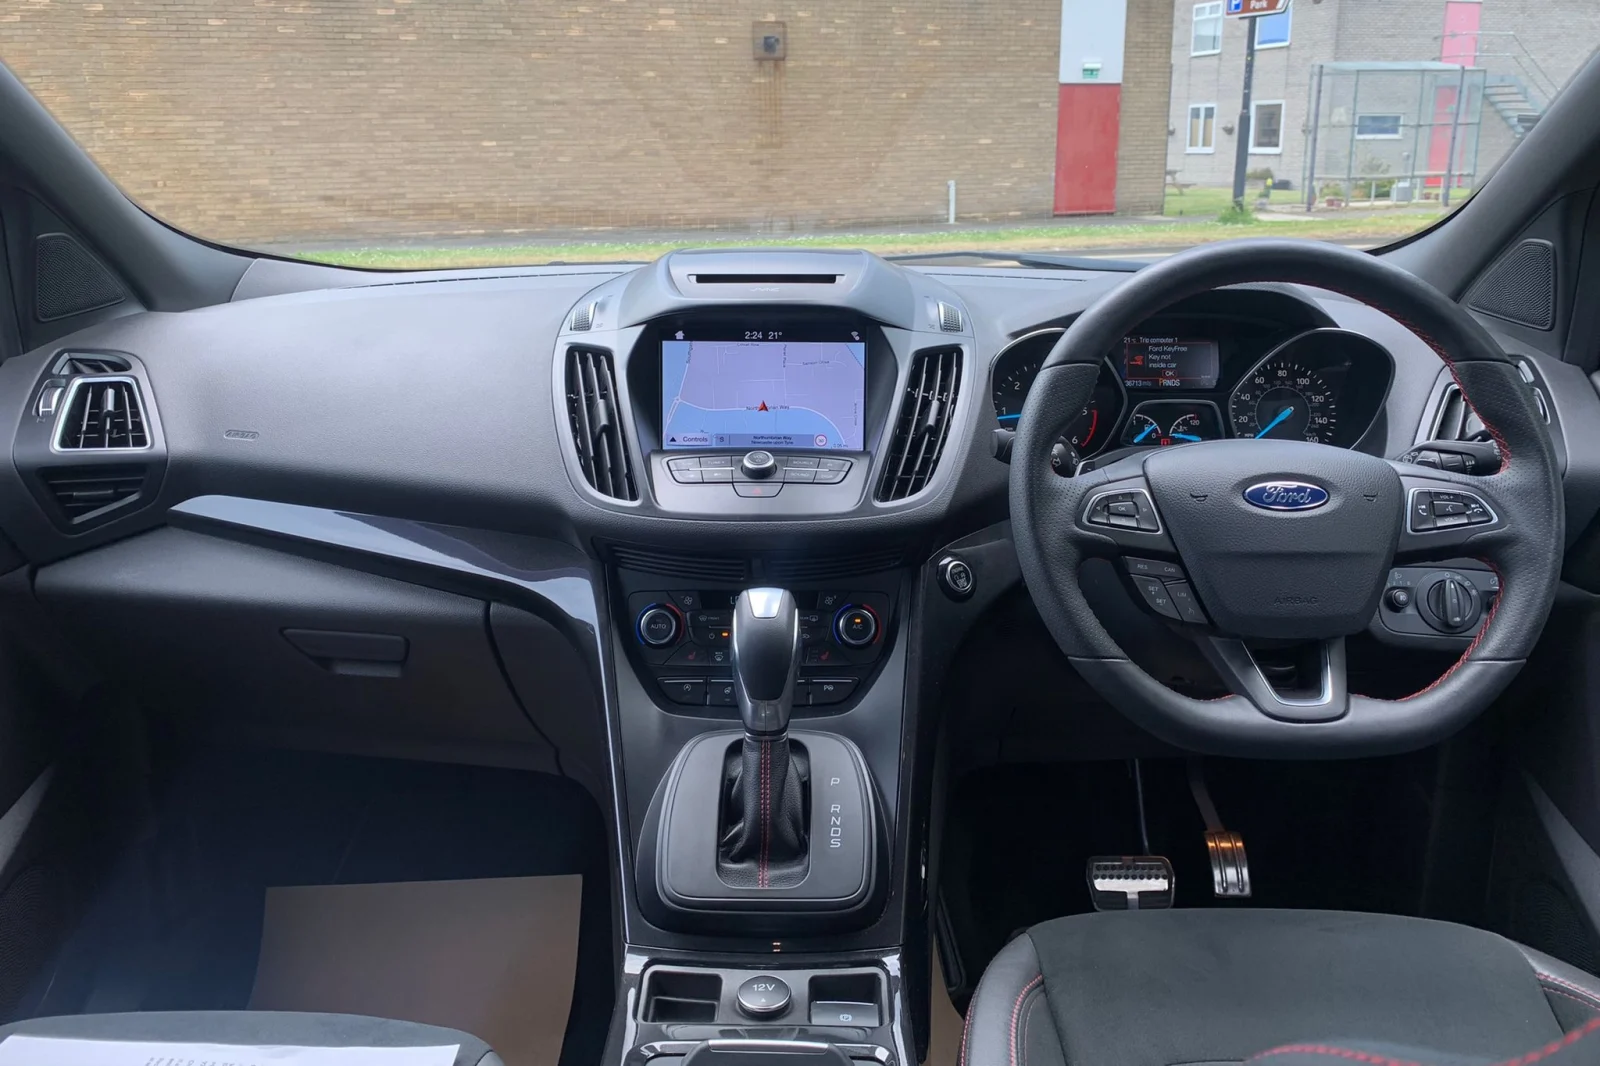 2019_Ford_Kuga_front_interior2-scaled.webp